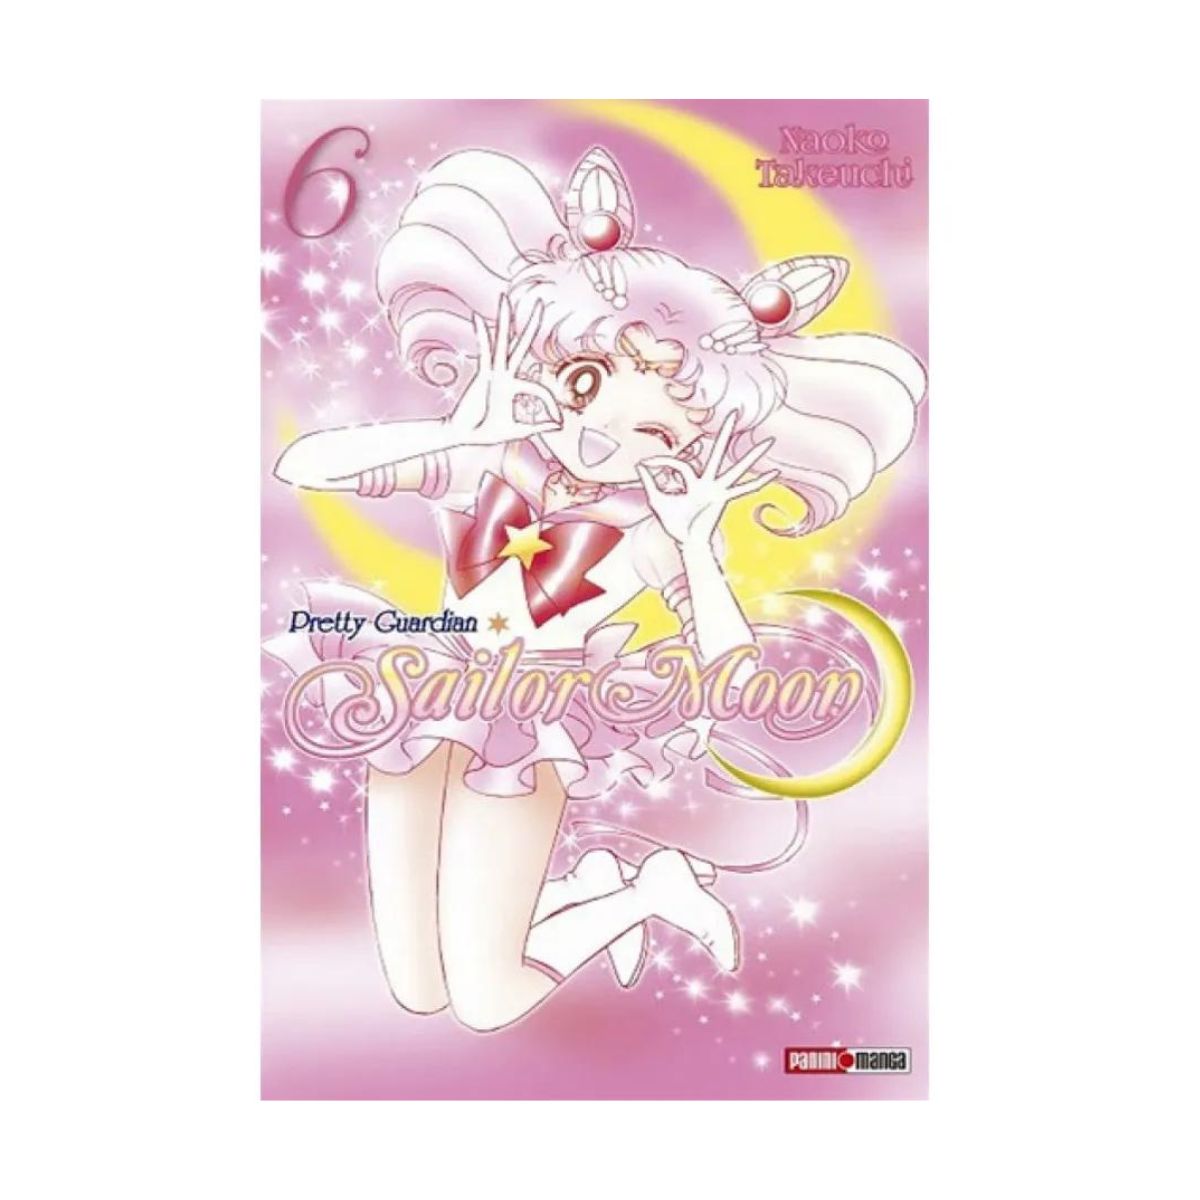 Sailor Moon Panini Manga Español Tomo A Elegir - MarchanteMX